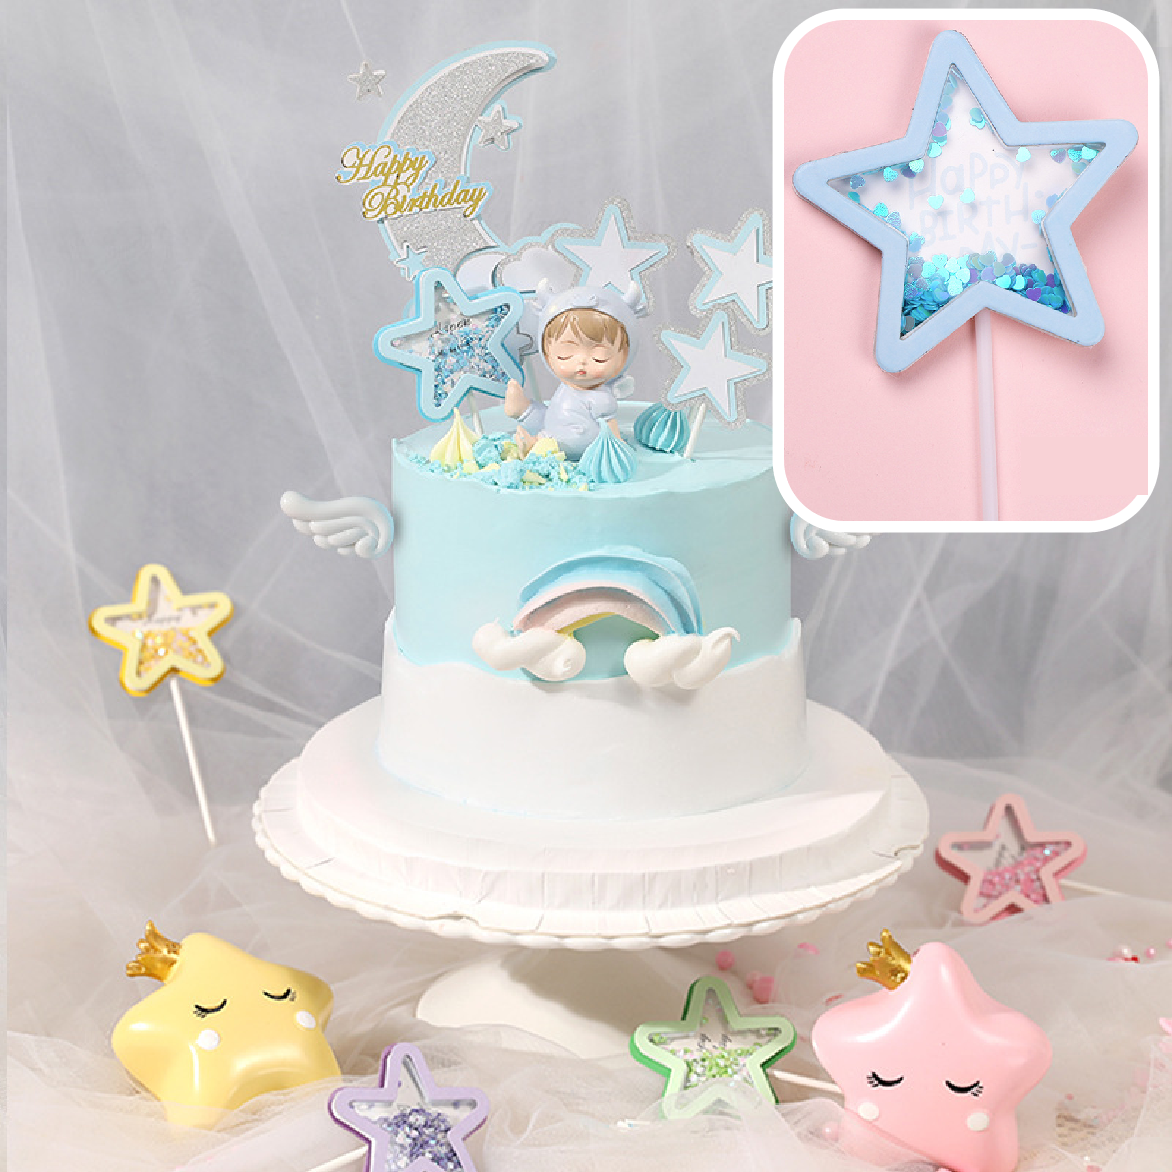 Cake Decoration, Cupcake Topper - 'Sequin Star' - Blue - Rampant Coffee Company